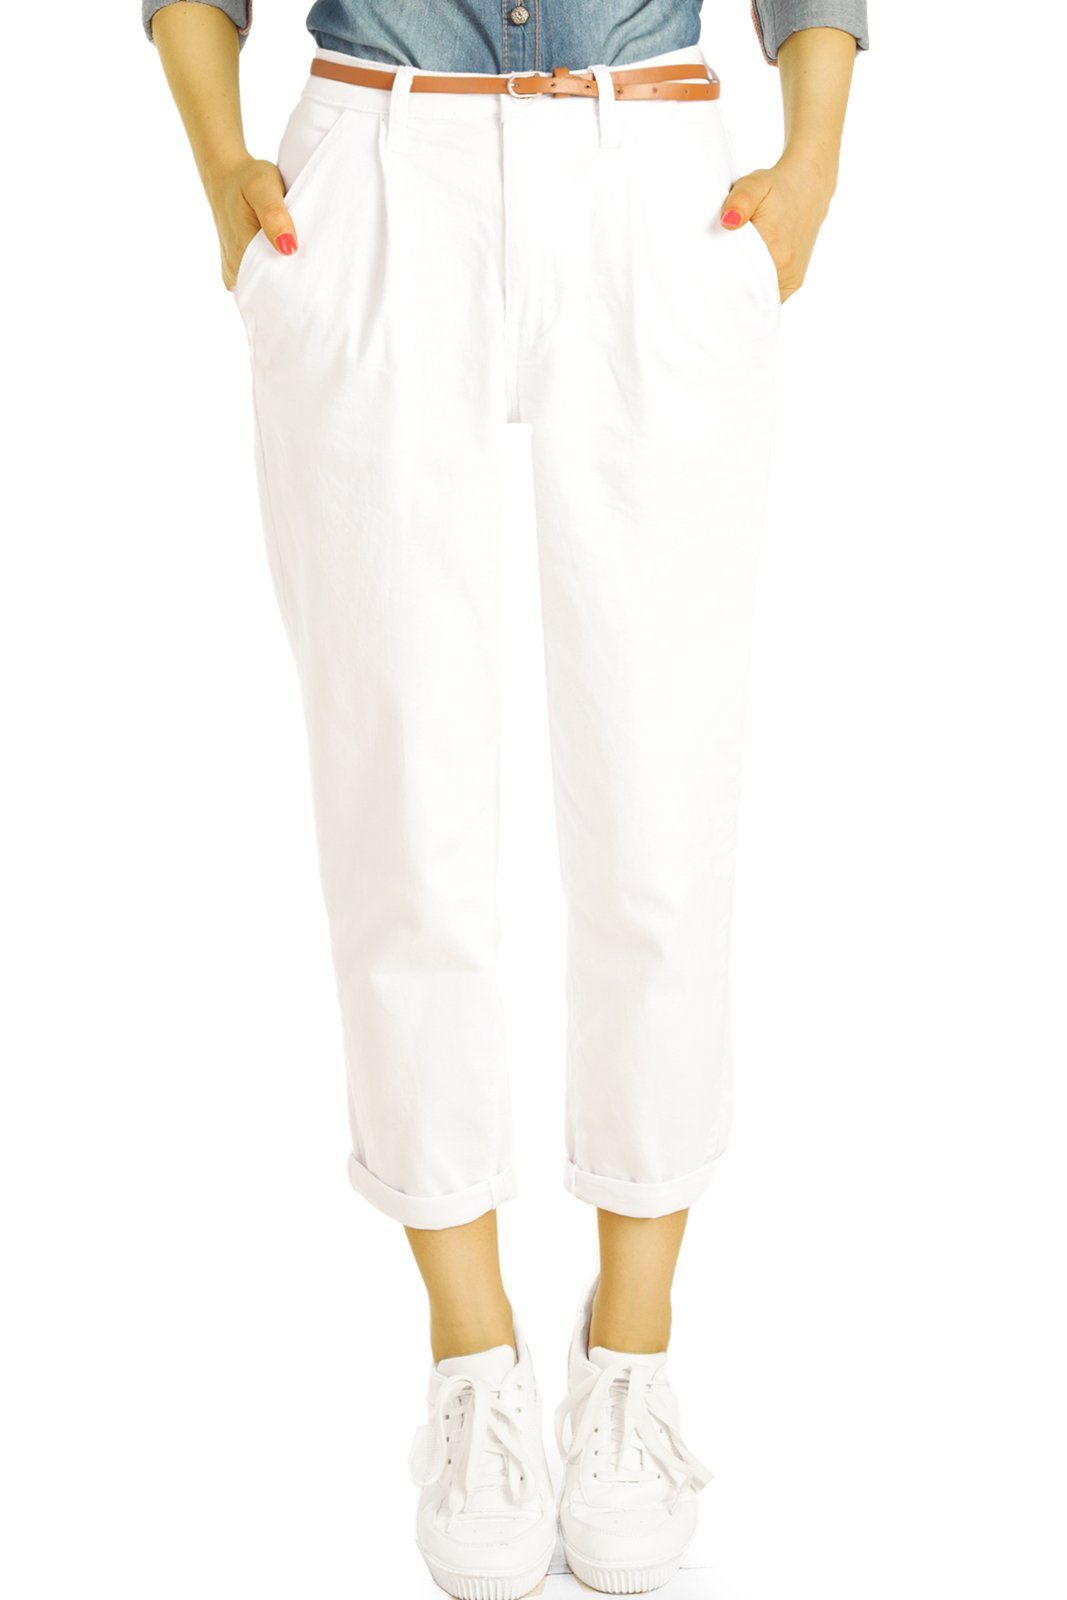 High 5-Pocket-Style, waist j24g-4 Medium Waist weiß styled be - Stretch-Anteil Hose Damen - Jeans mit Mom-Jeans Mom